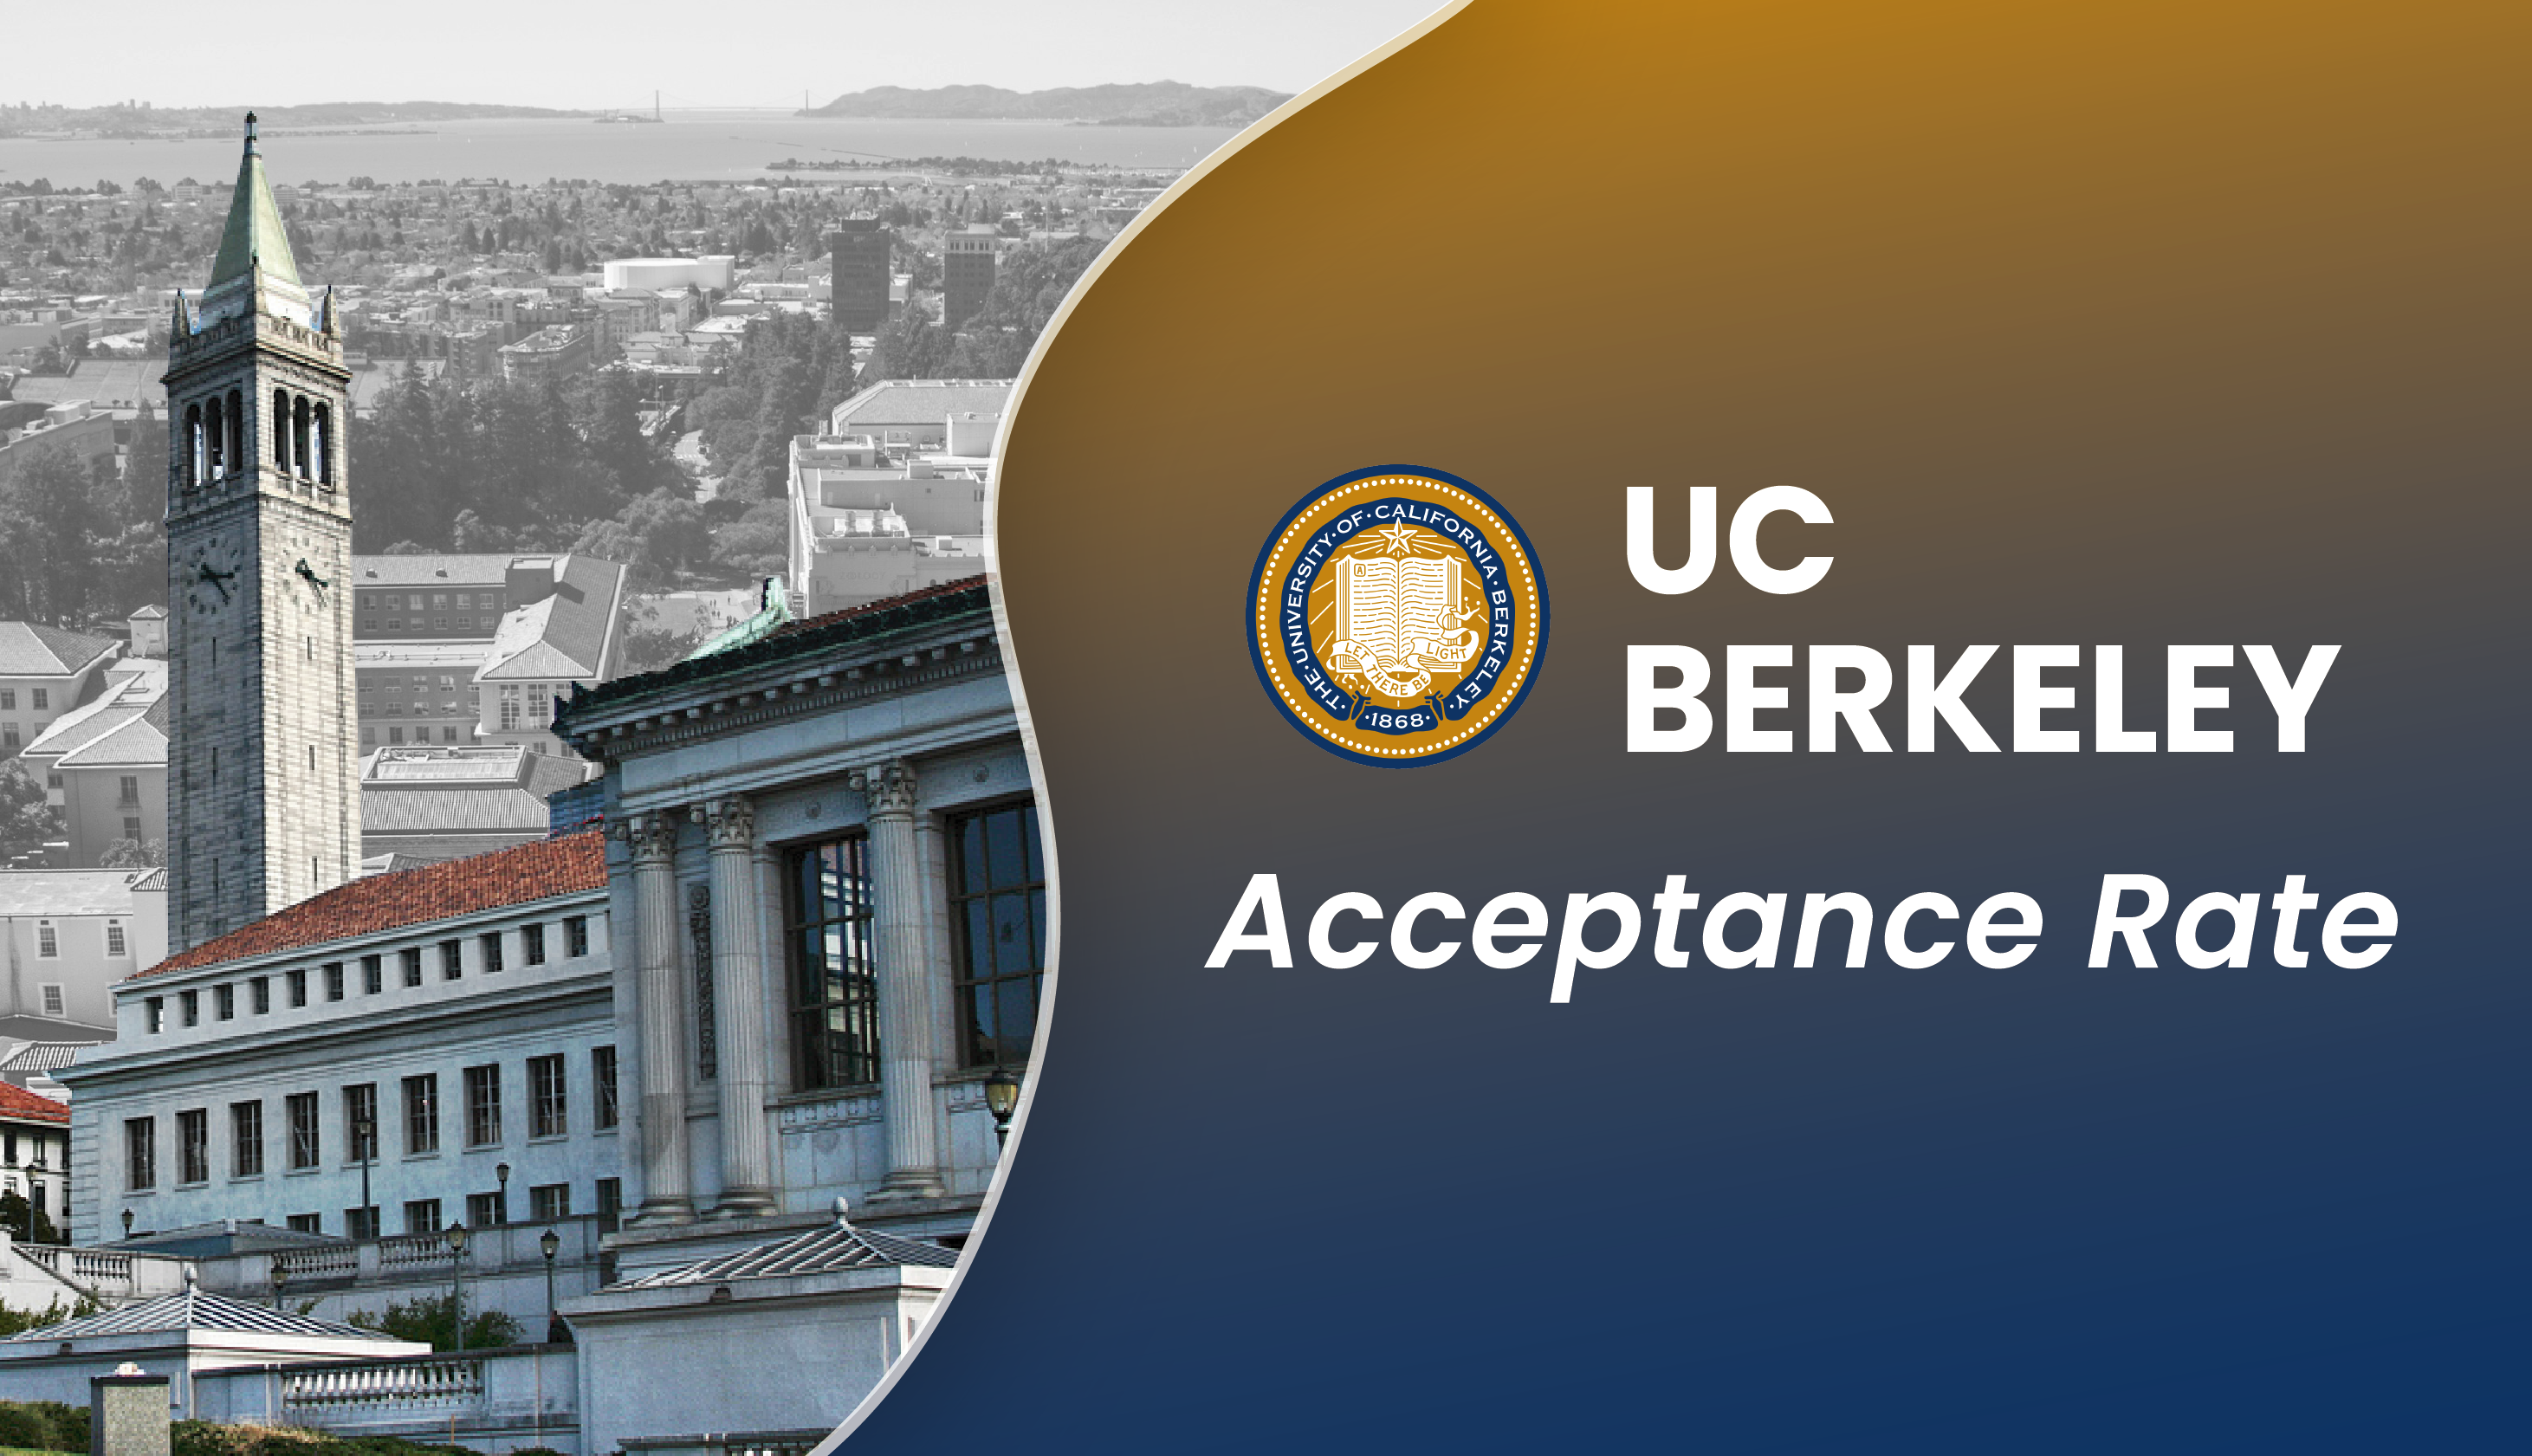 uc berkeley psychology phd acceptance rate